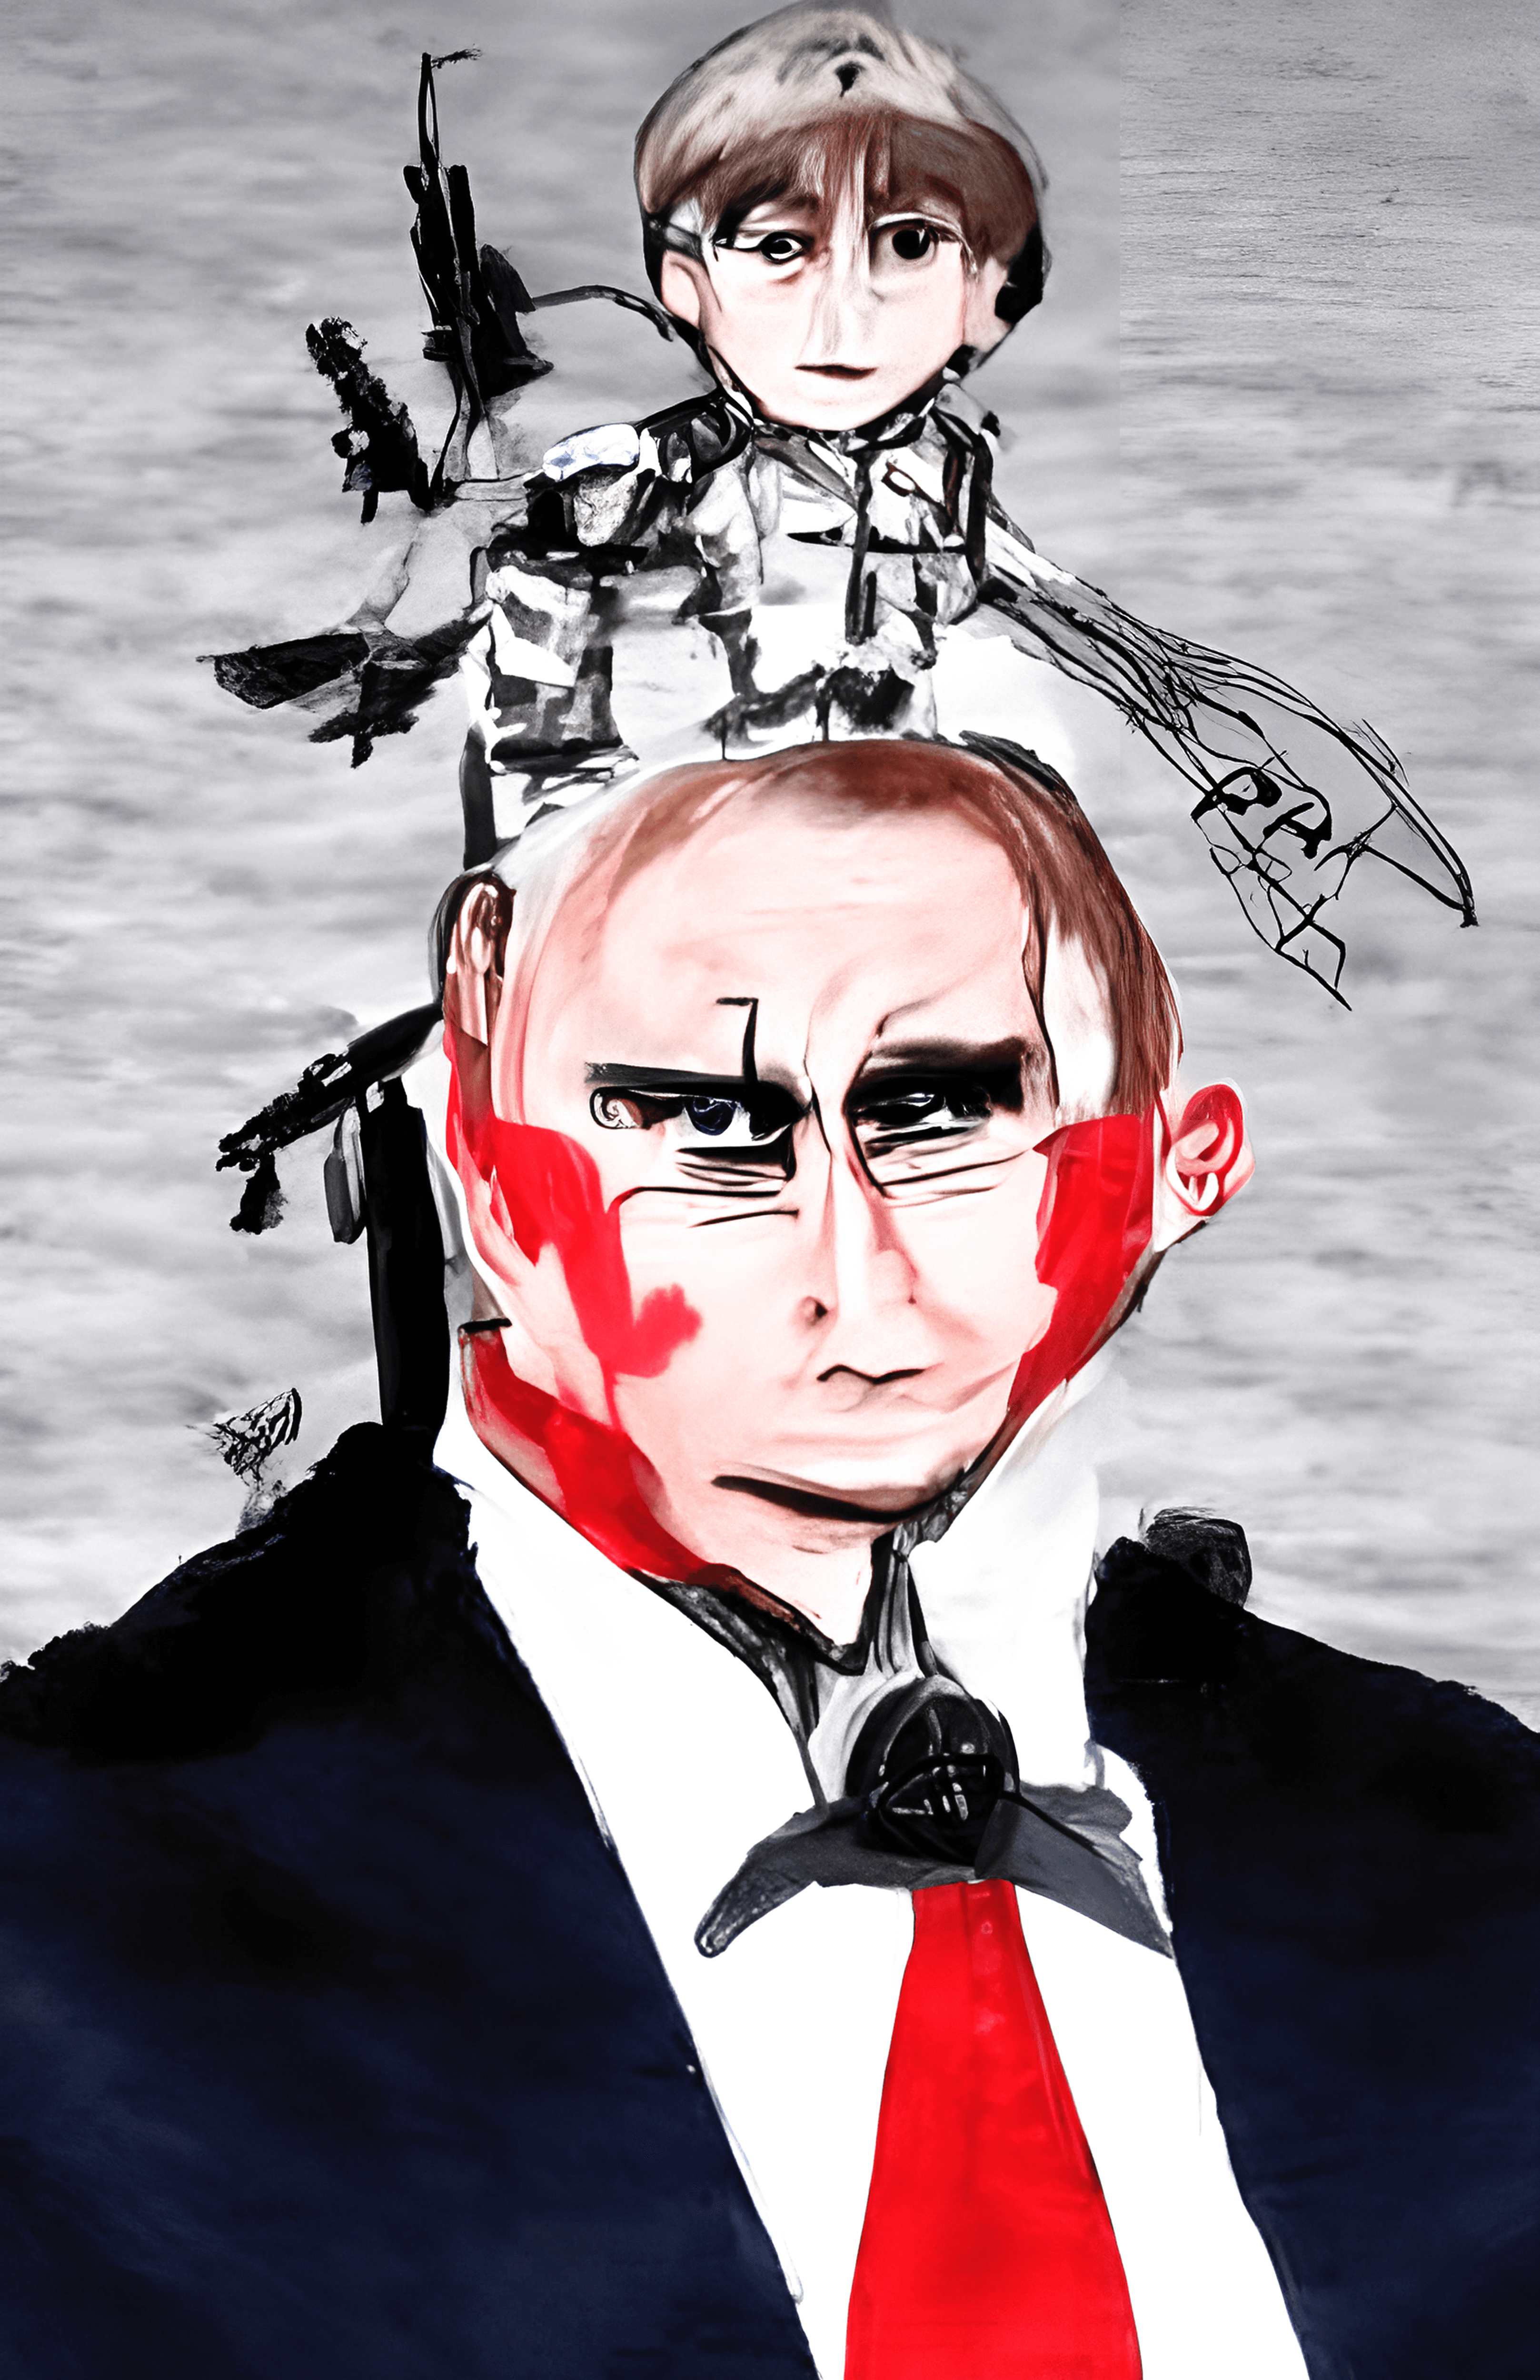 Kids Takeover Putin #5: New Kid Boss in Town